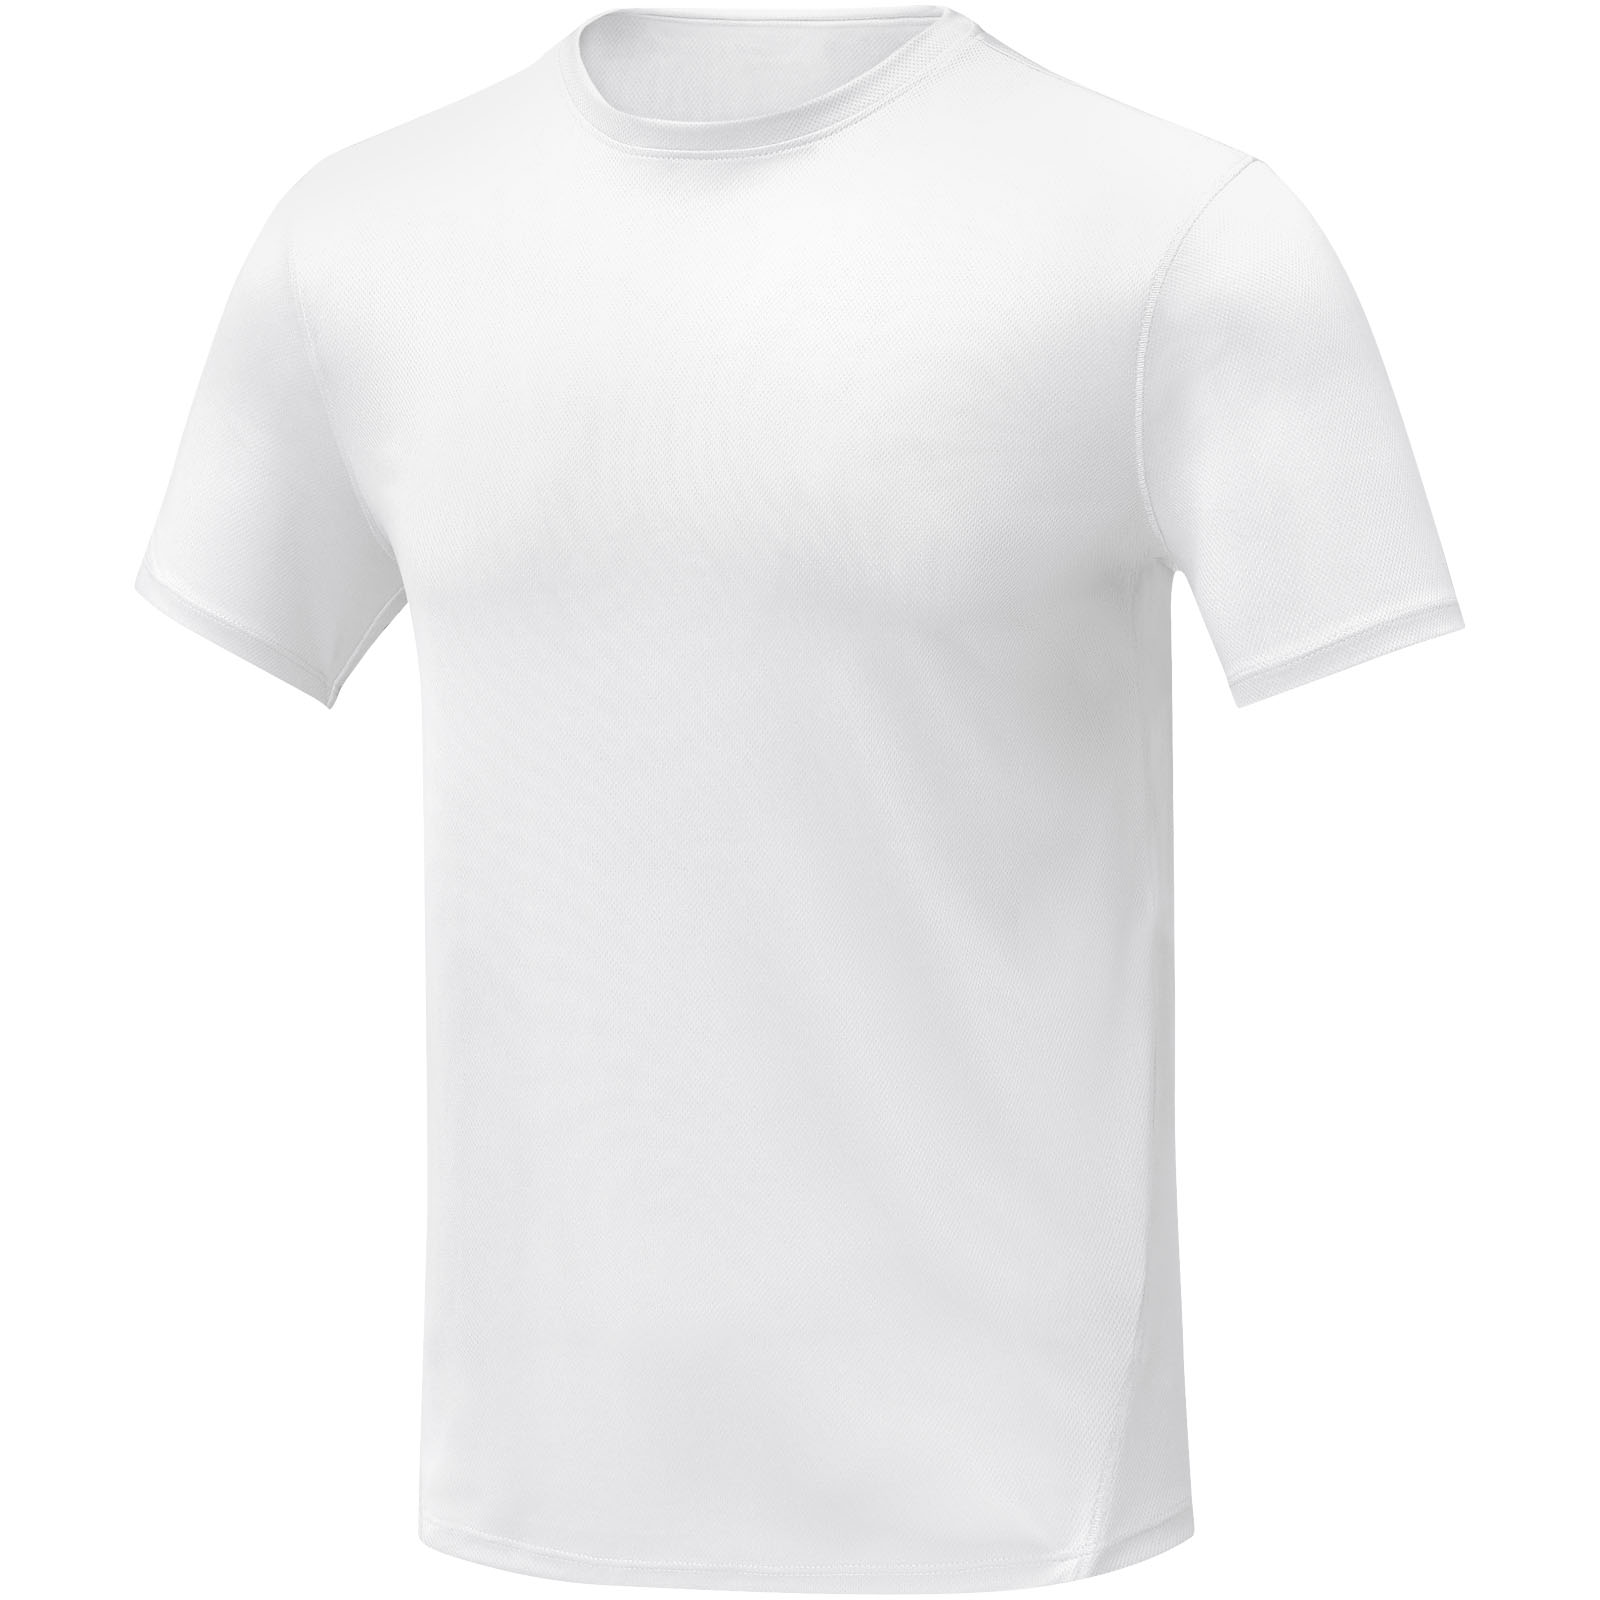 T-shirts - Kratos short sleeve men's cool fit t-shirt